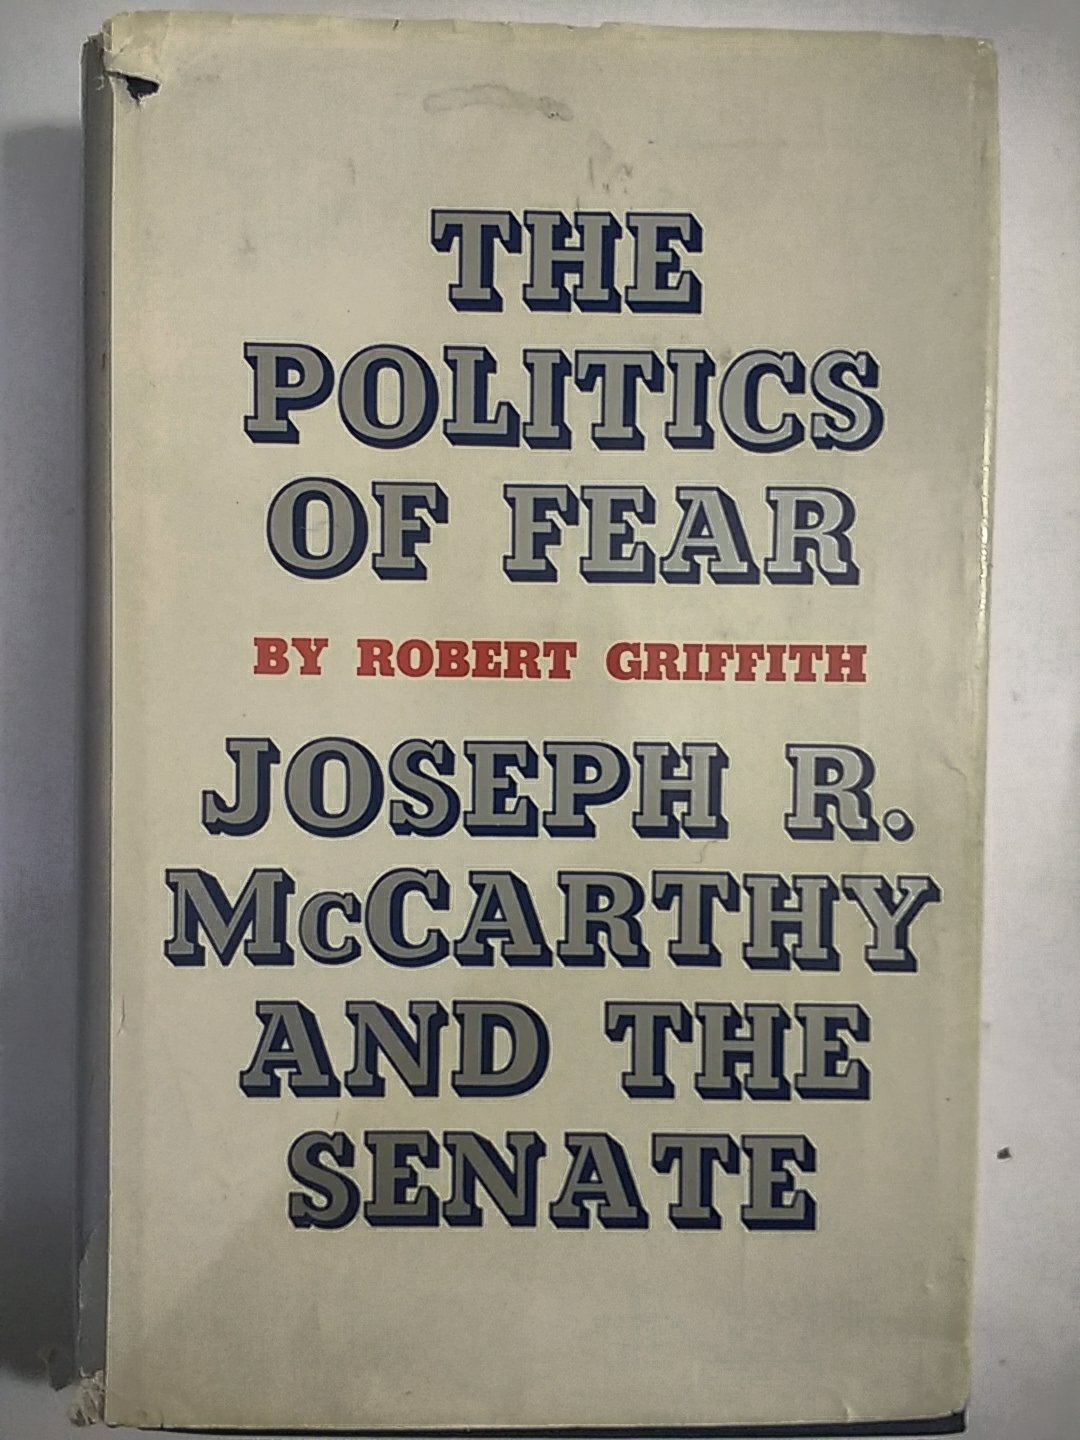 The politics of fear: Joseph R. McCarthy and the Senate - Griffith, Robert